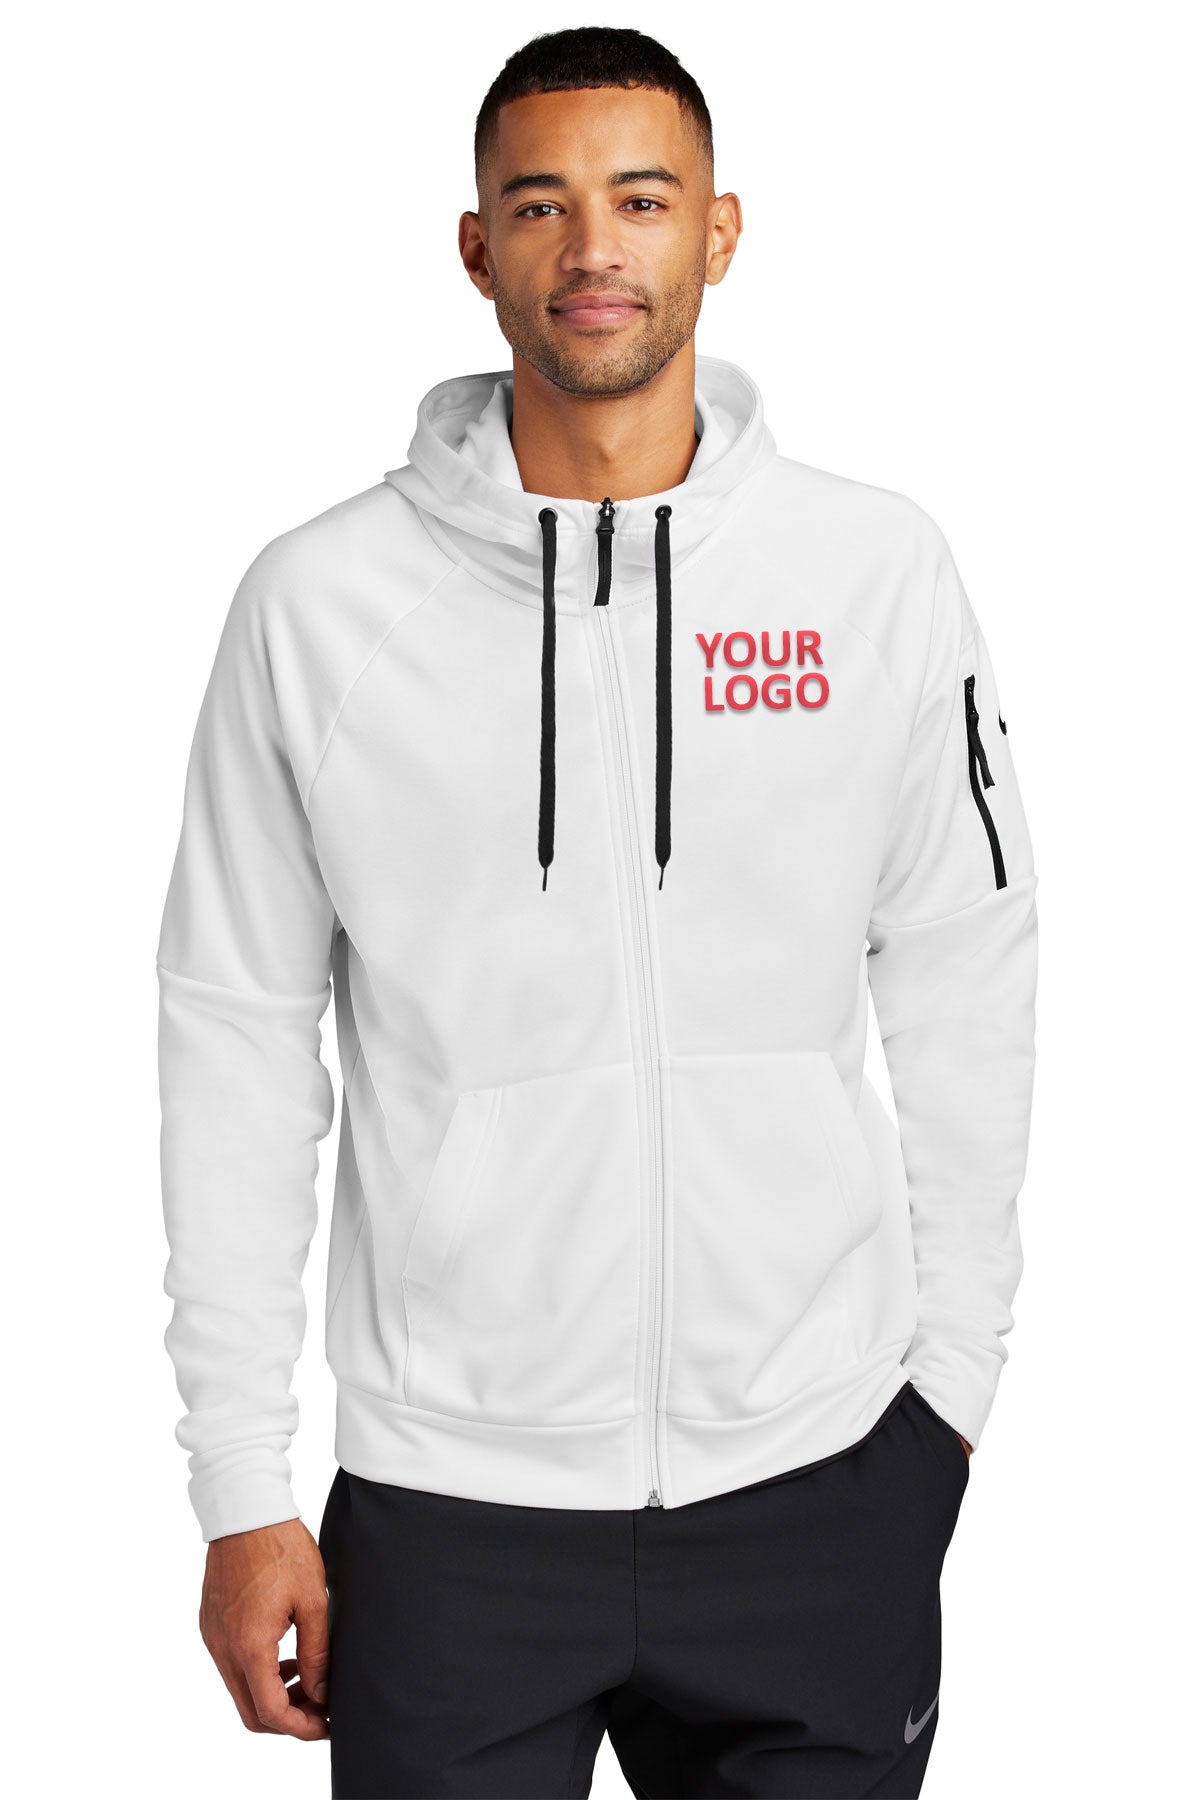 Nike White NKFD9859 custom logo sweatshirts embroidered